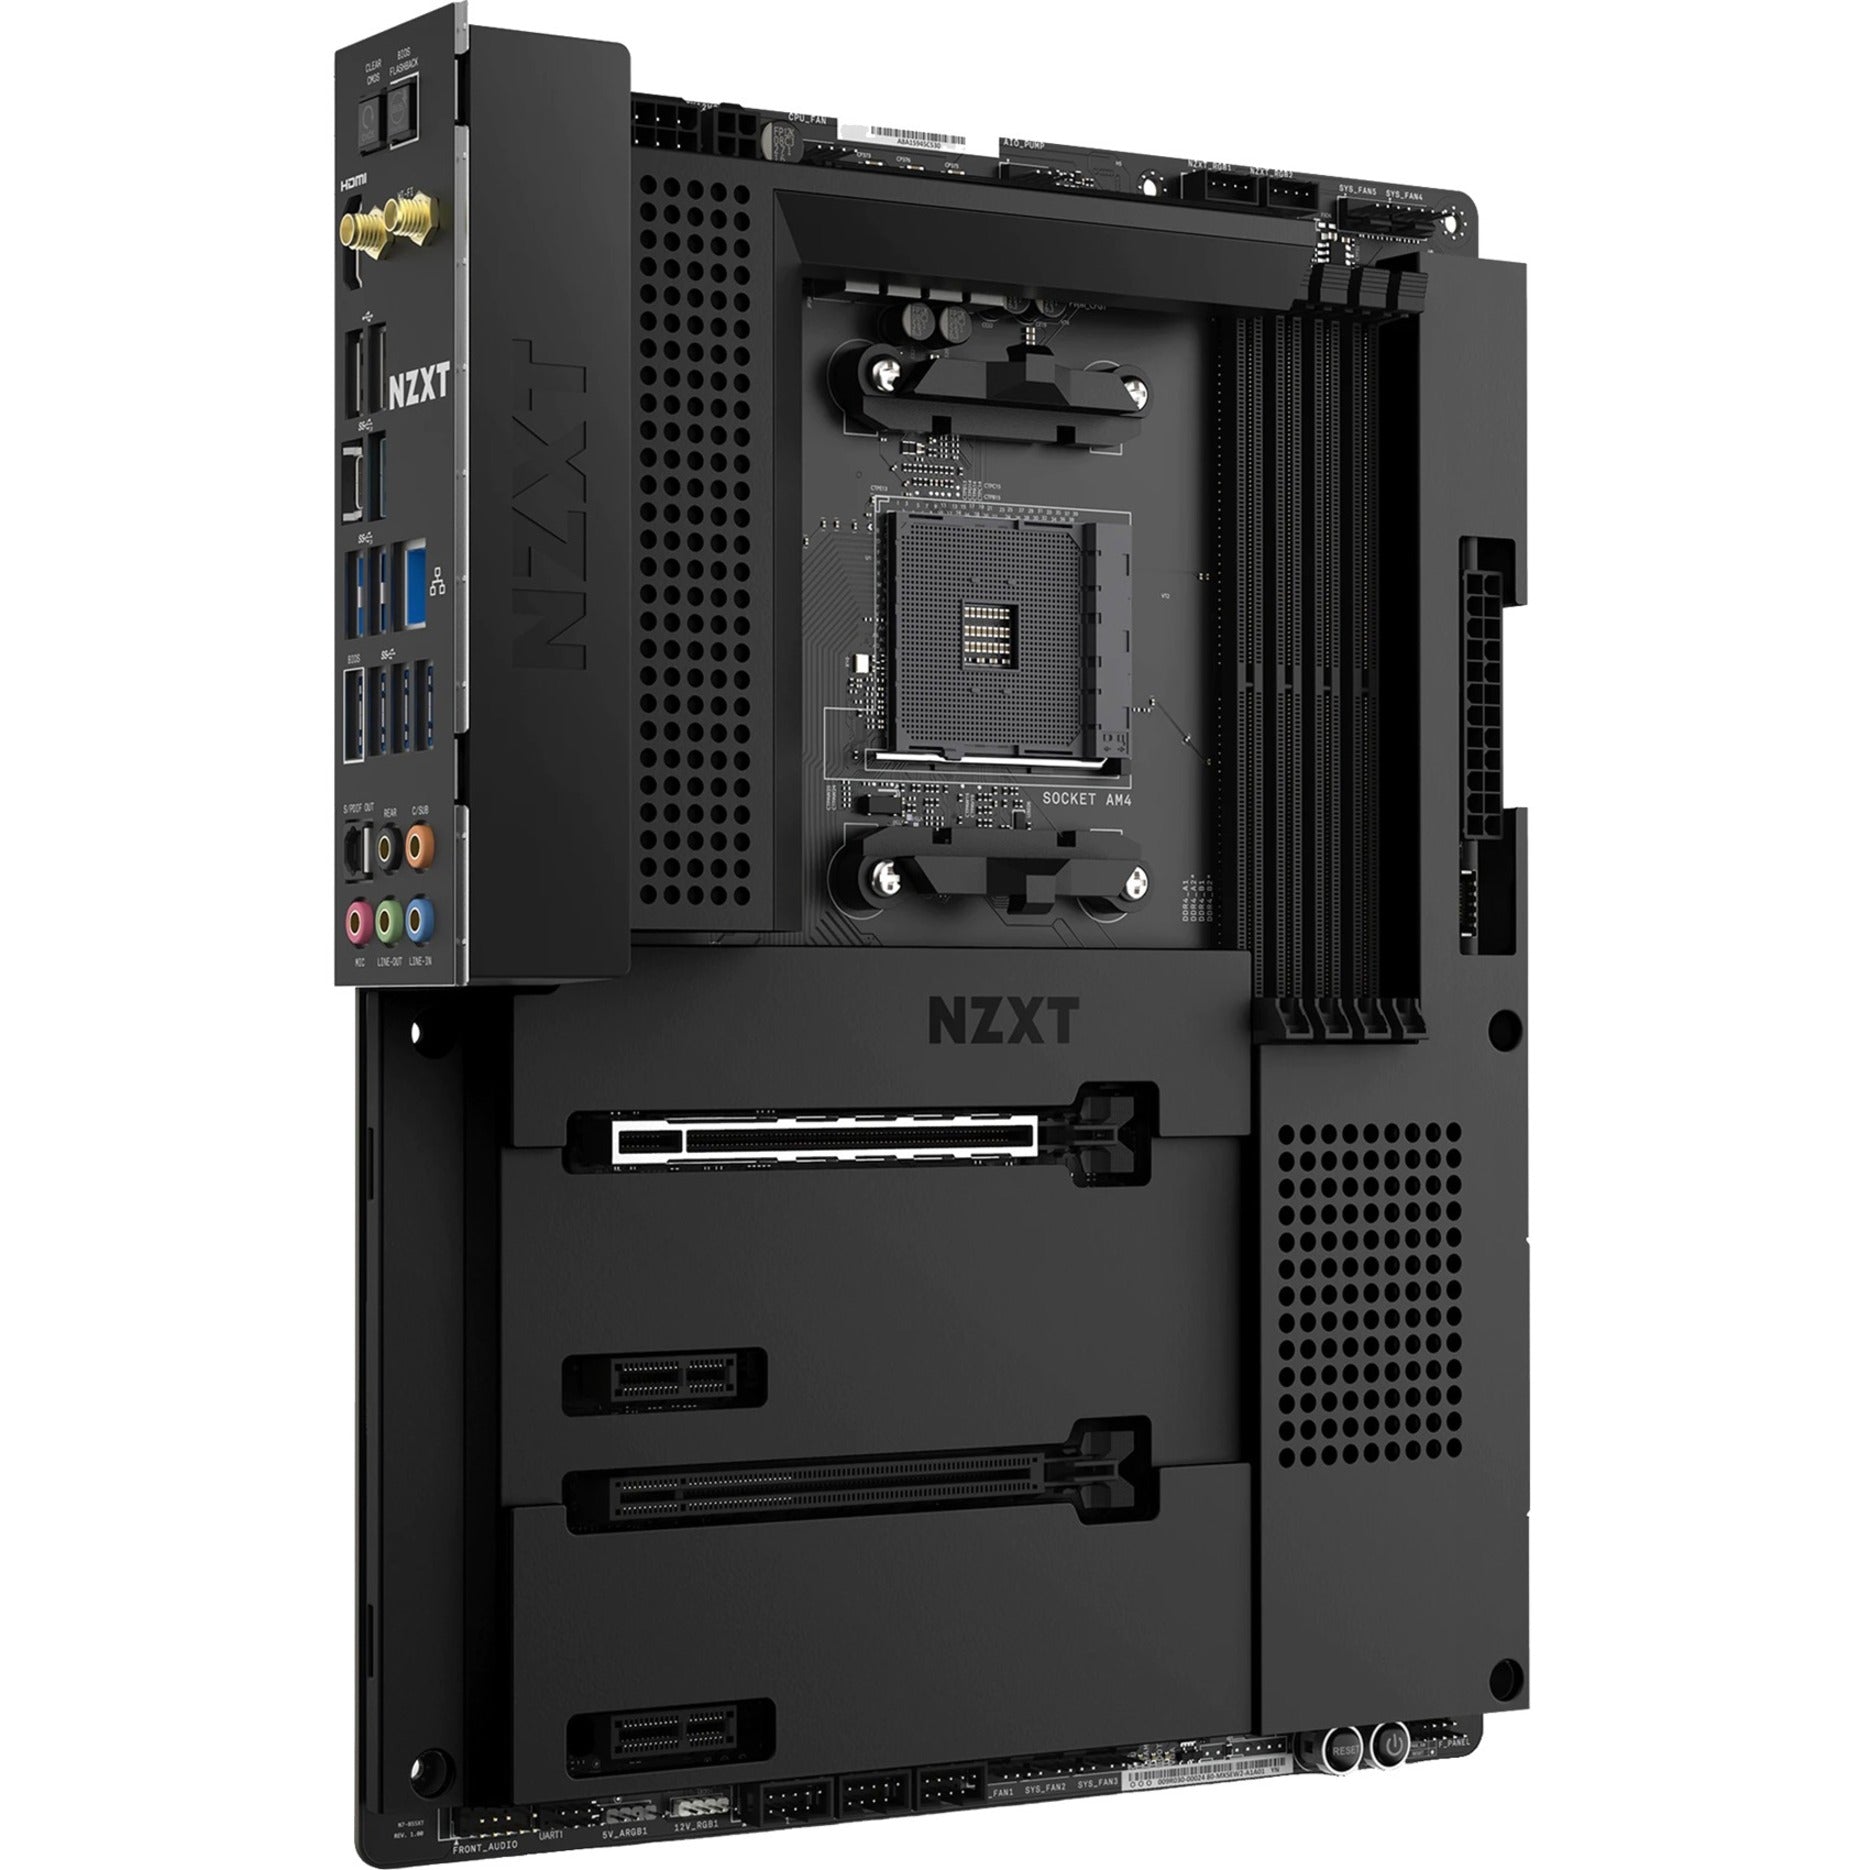 NZXT N7-B55XT-B1 N7 B550 Gaming Desktop Motherboard, AMD B550 Chipset, Socket AM4, ATX